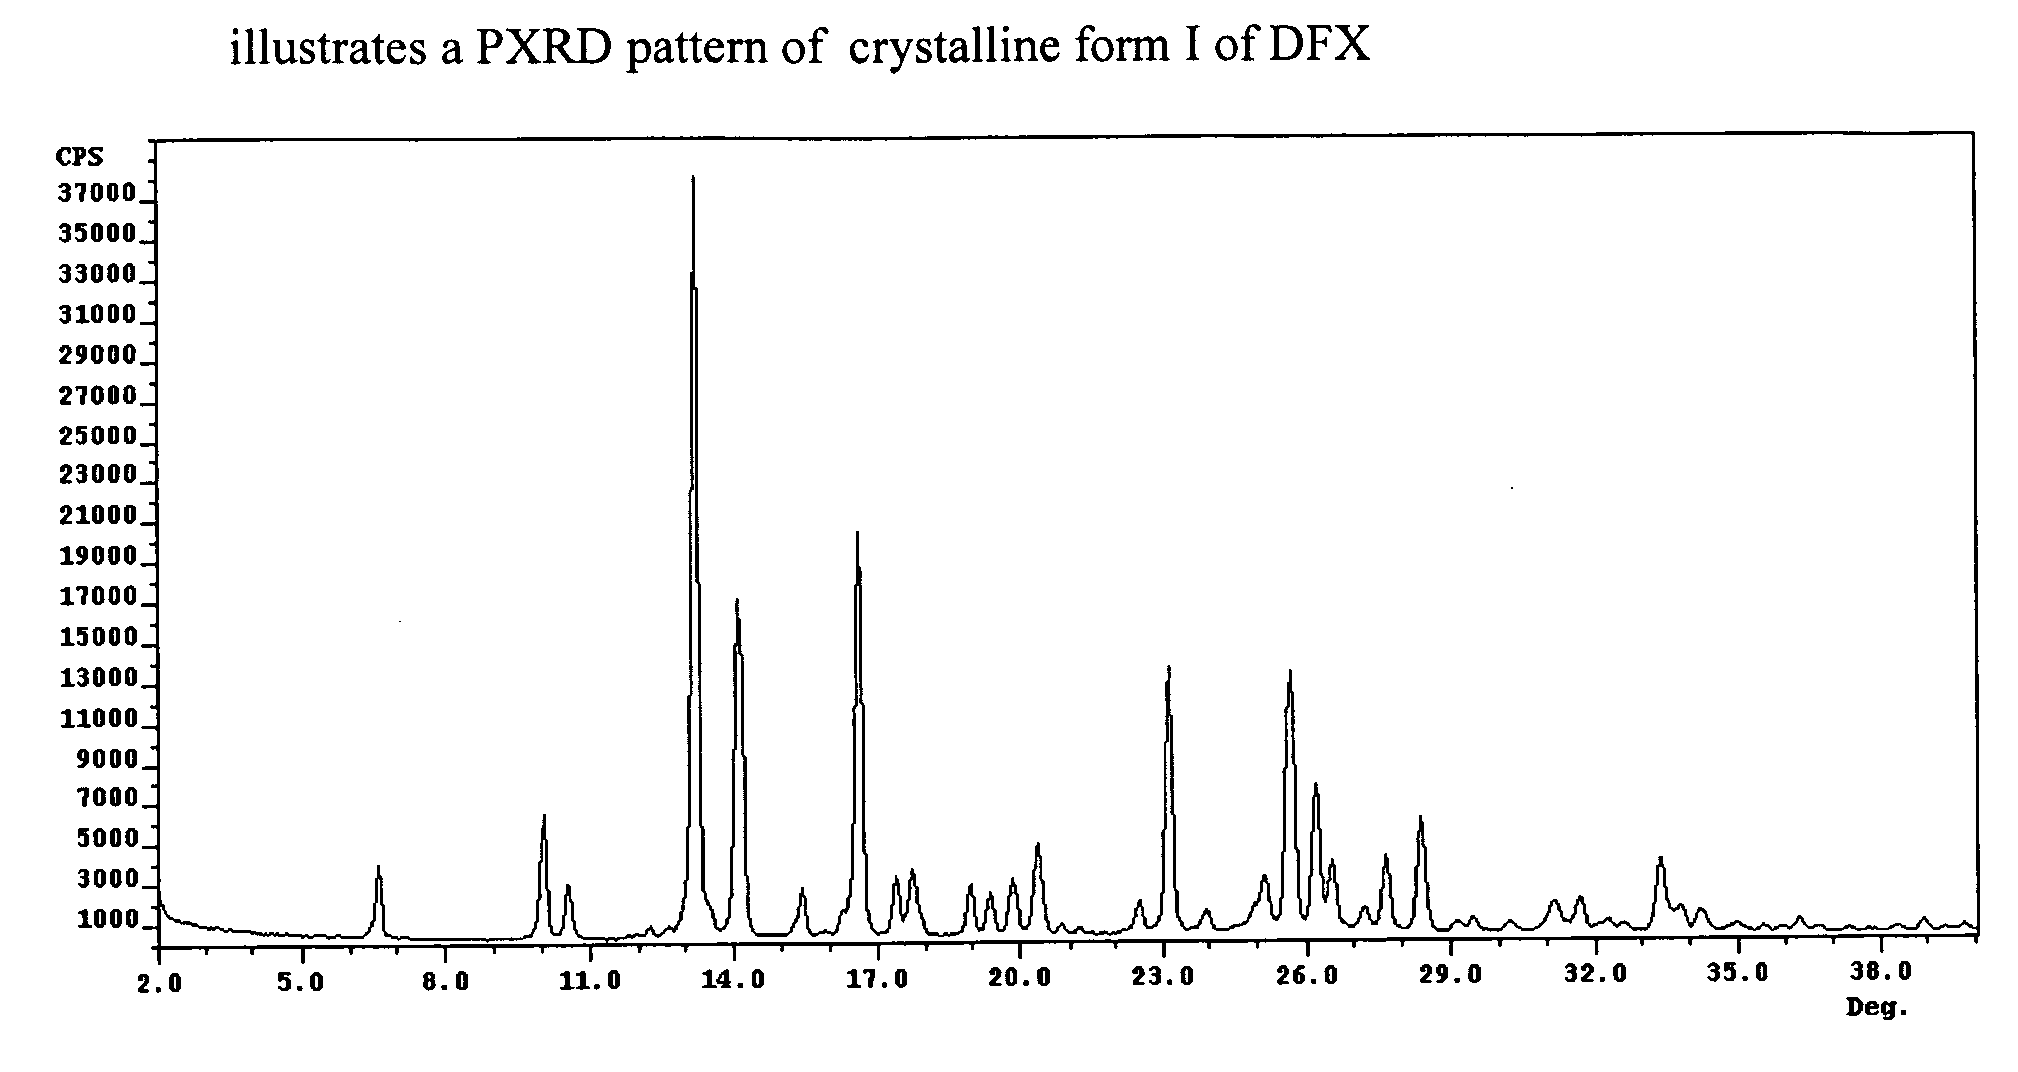 Crystalline forms of Deferasirox